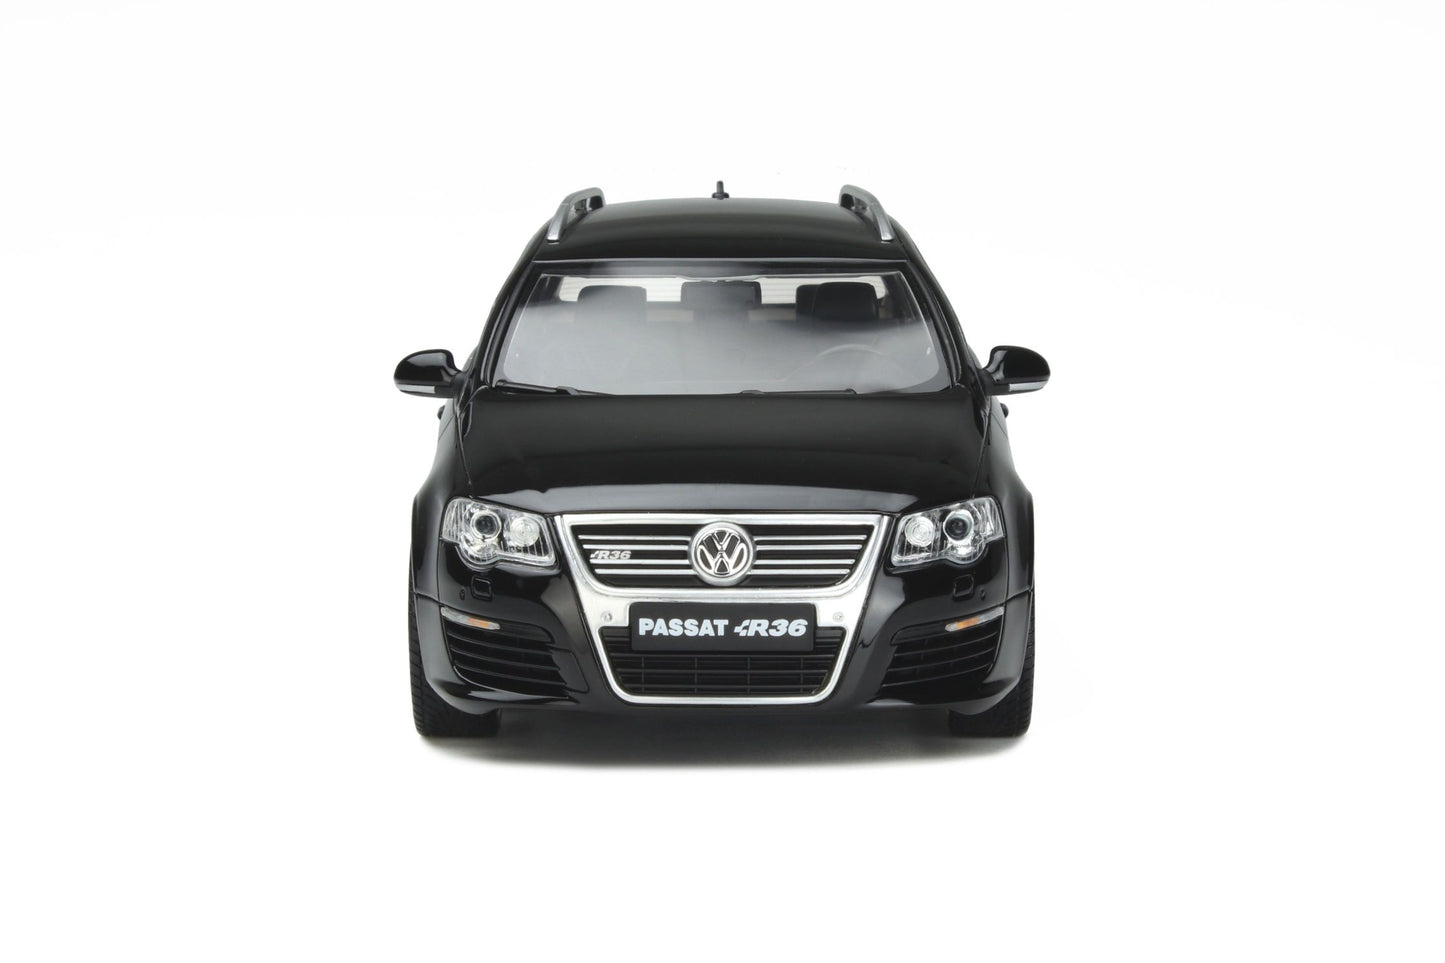 OttOmobile - Volkswagen Passat R36 Variant (B6) (Deep Black Metallic) 1:18 Scale Model Car